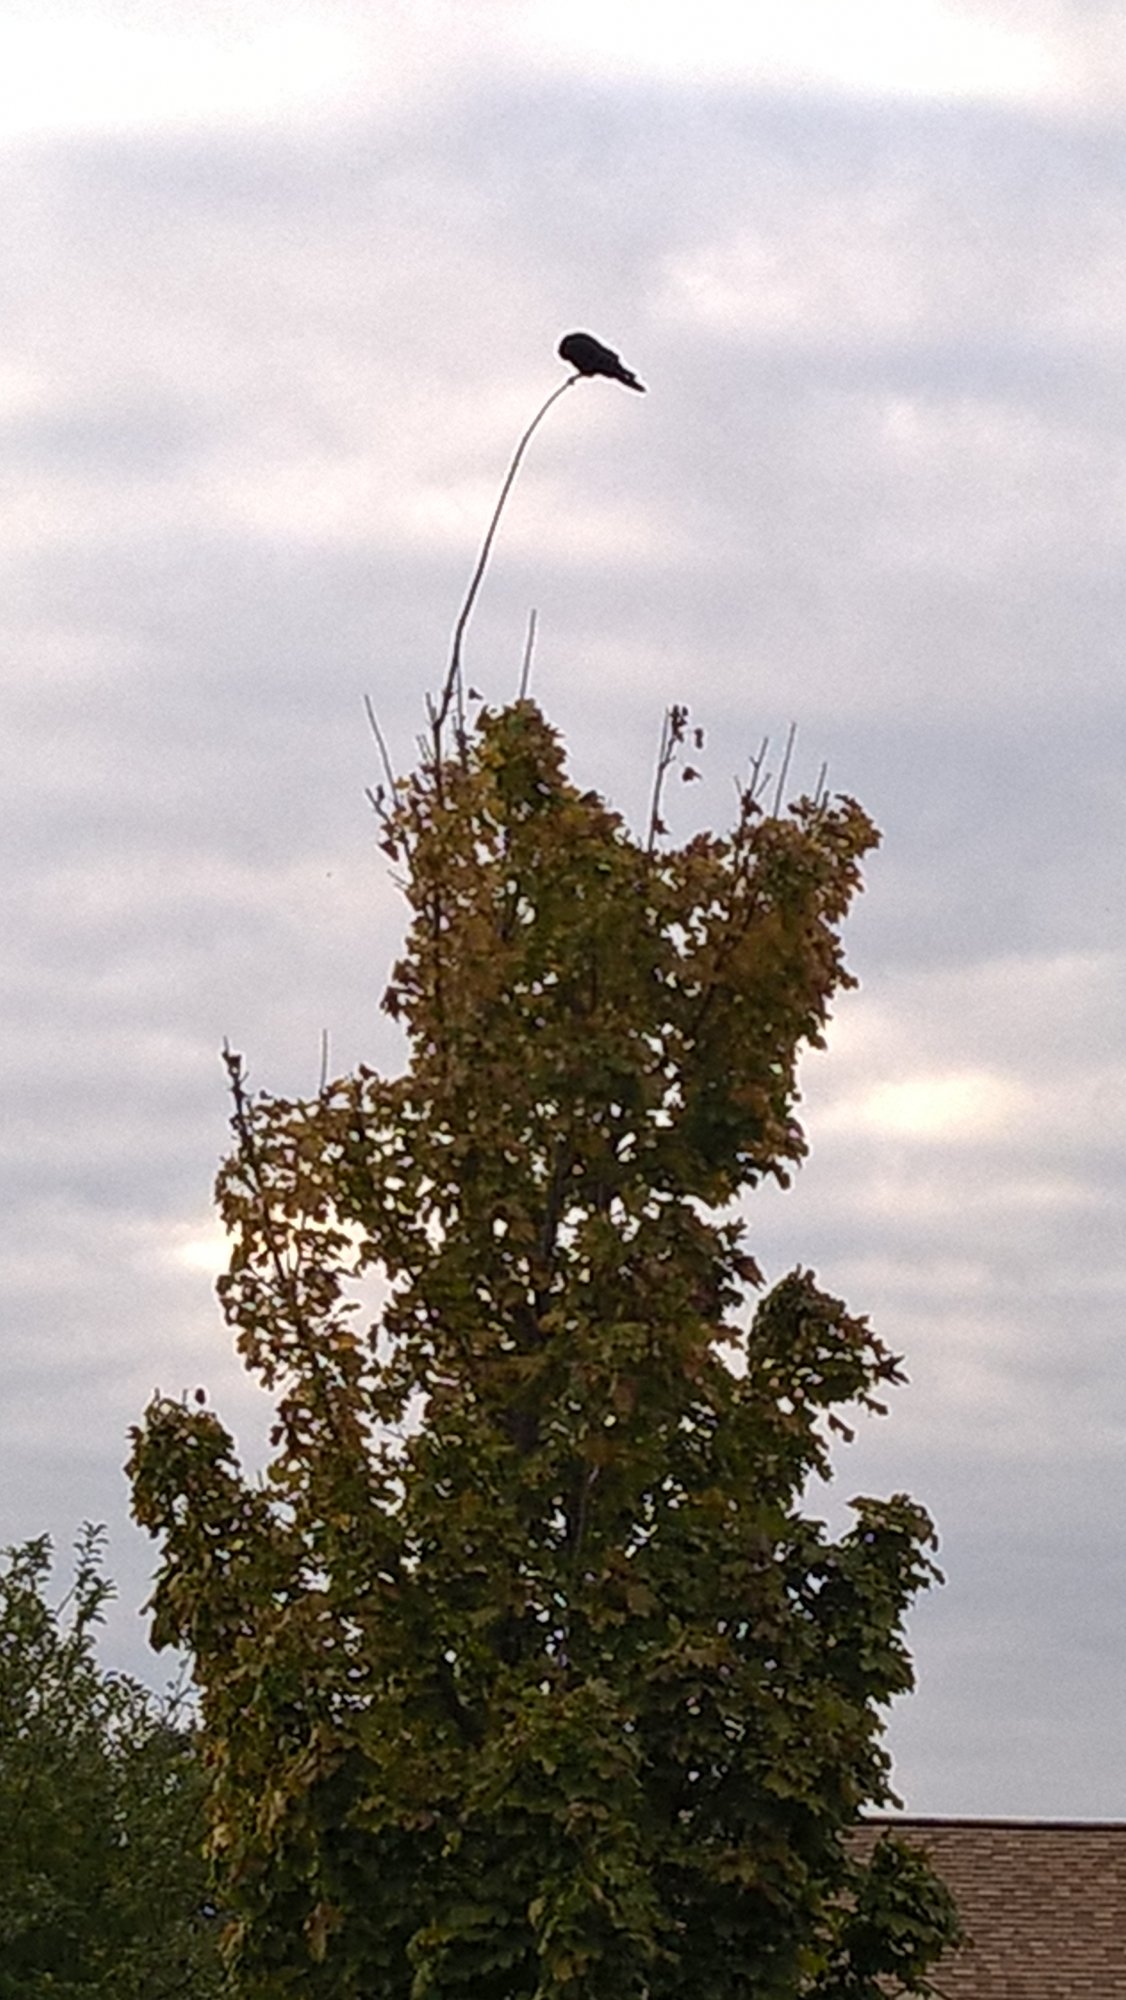 Black bird on top of tree 1.jpg